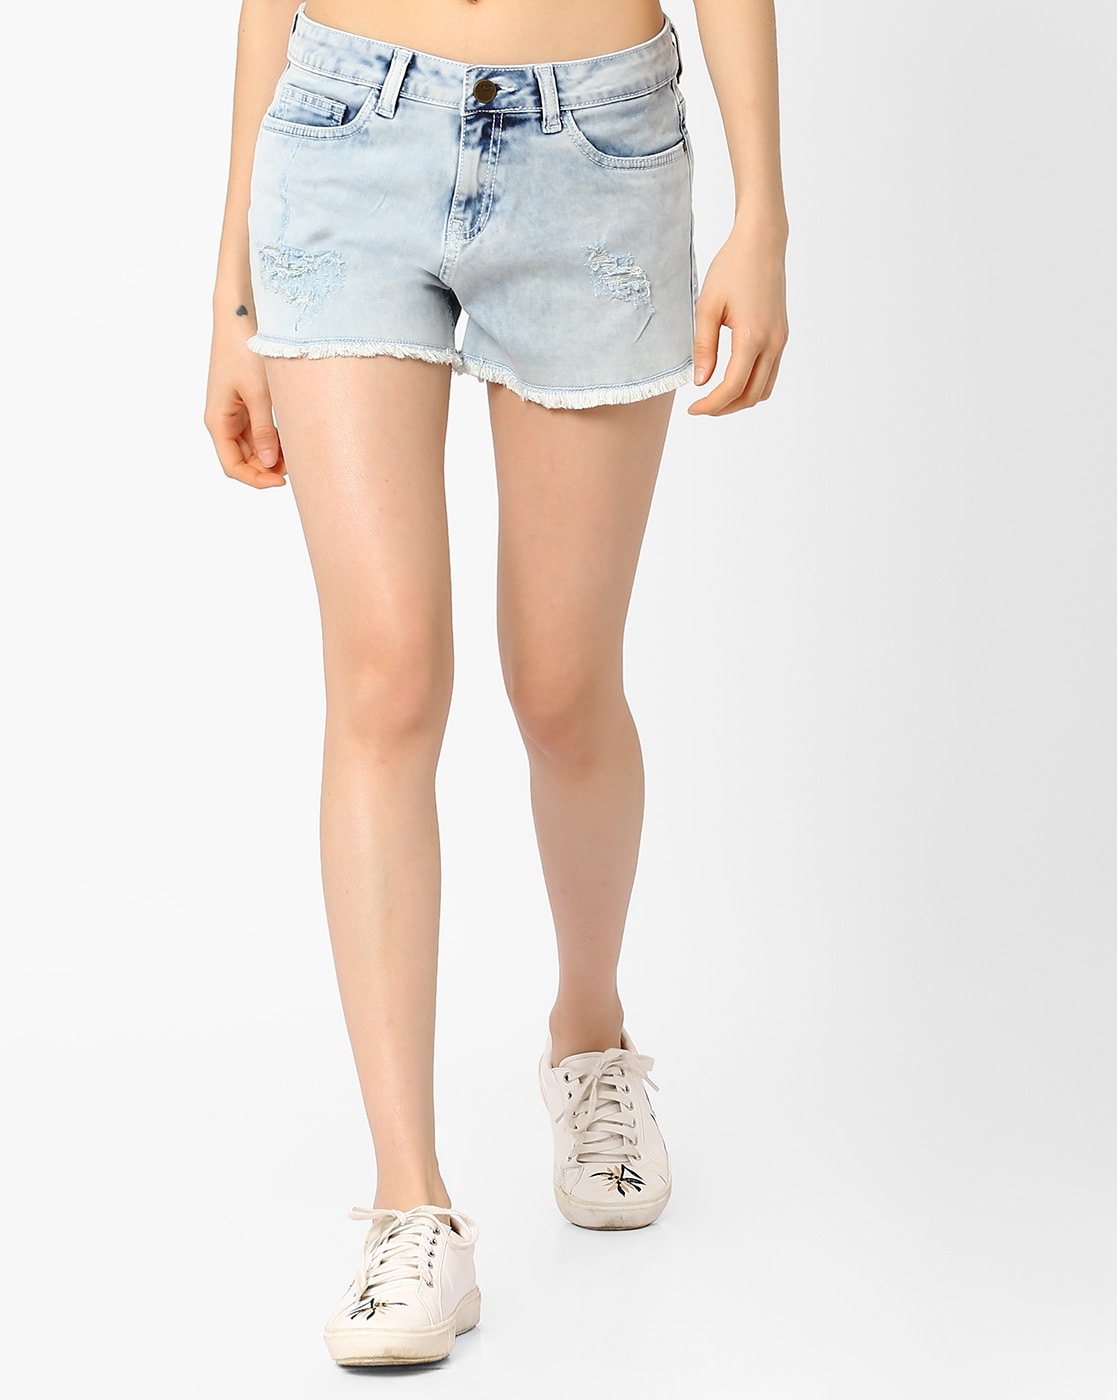 Buy Light Blue Shorts For Women By Ajio Online Ajio Com